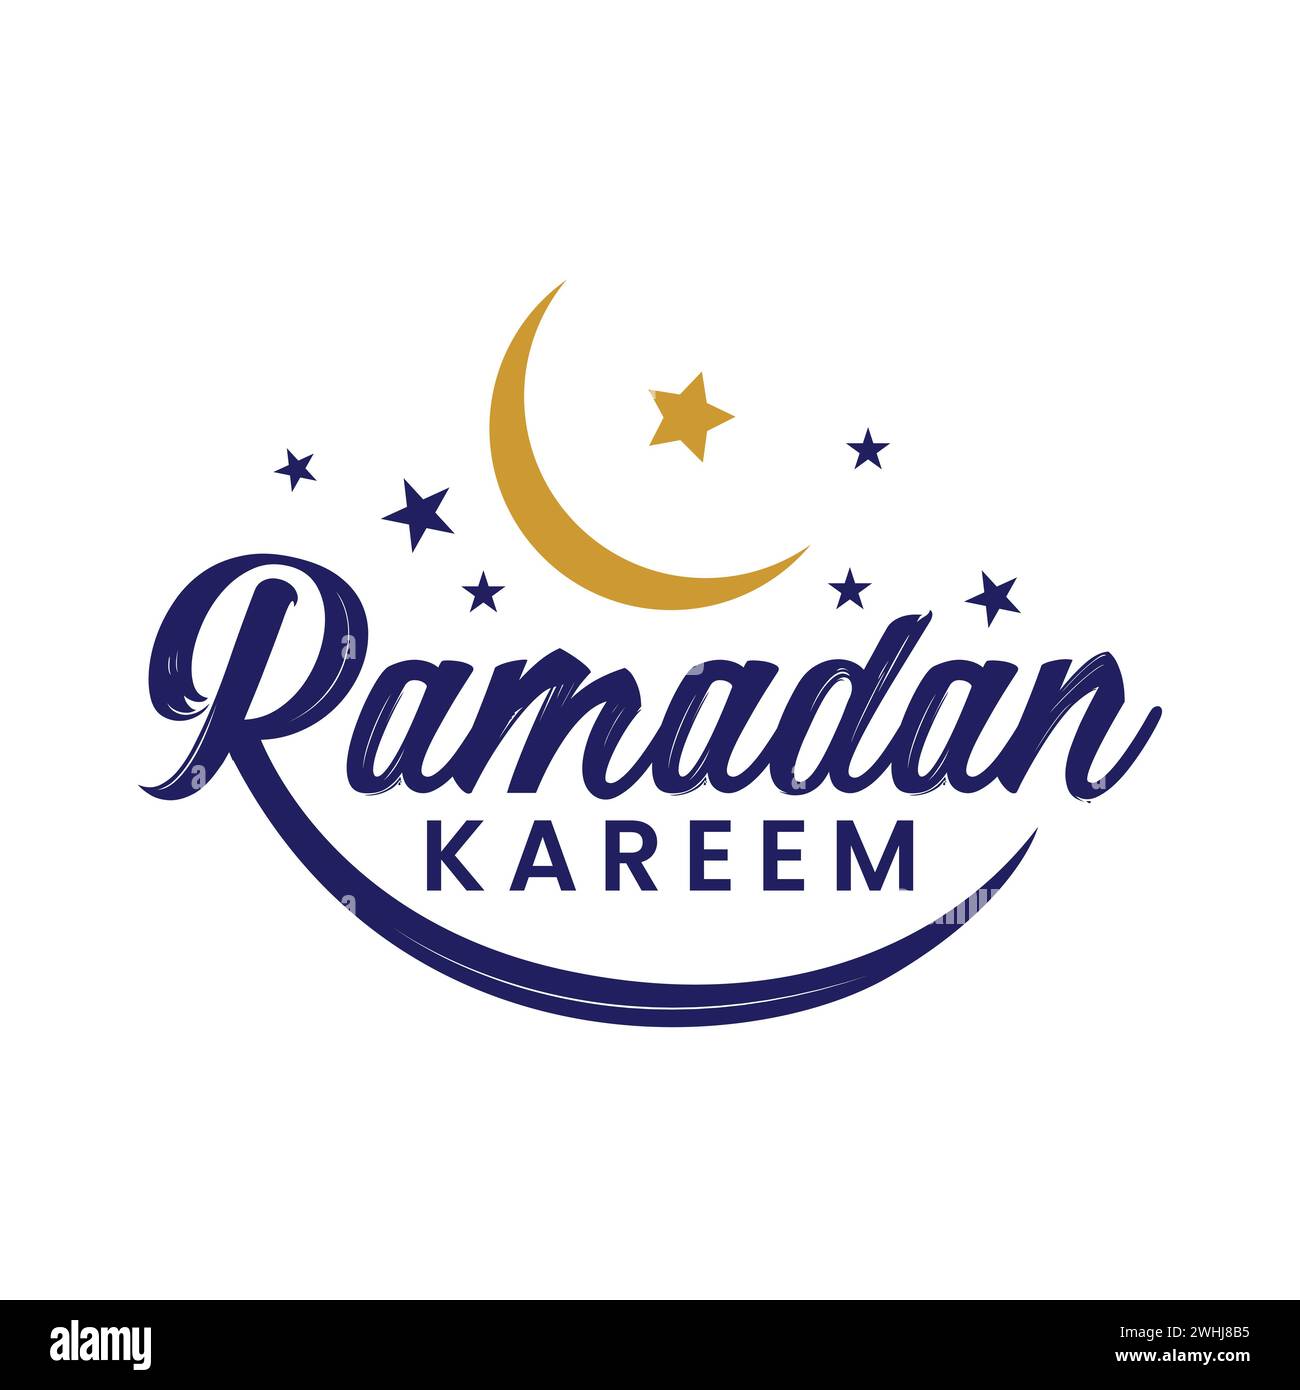 Ramadan Kareem carte de voeux vecteur lettrage illustration. Ramadan aussi appelé Ramazan, Ramzan, Ramadhan est musulman dans le monde entier un mois de jeûne. RAM Illustration de Vecteur